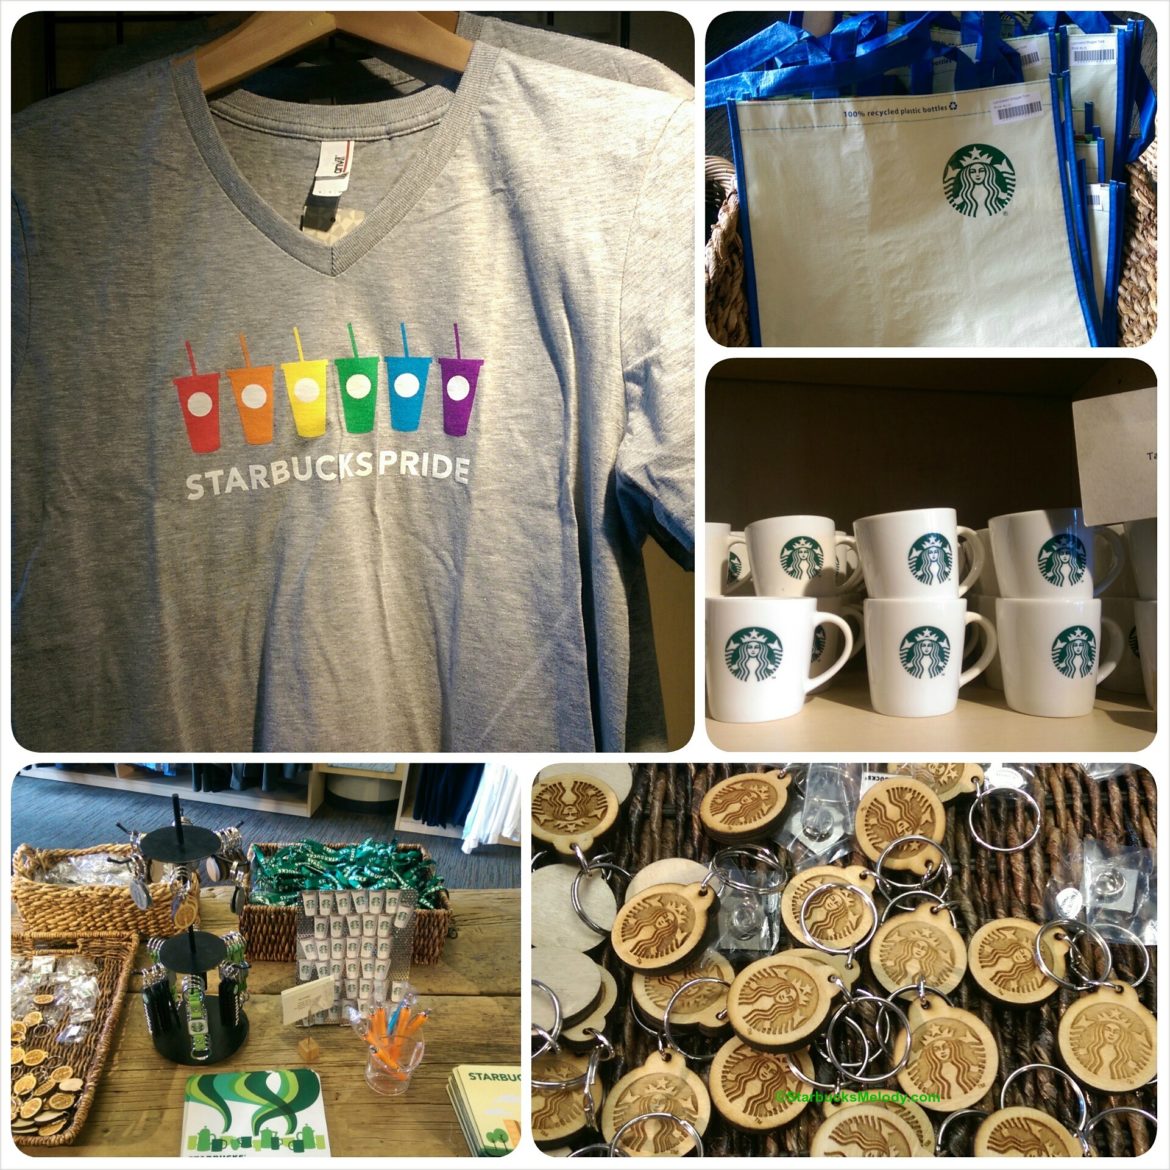 Starbucks Coffee Gear Store: New Starbucks #Pride Shirts & More Fun Stuff